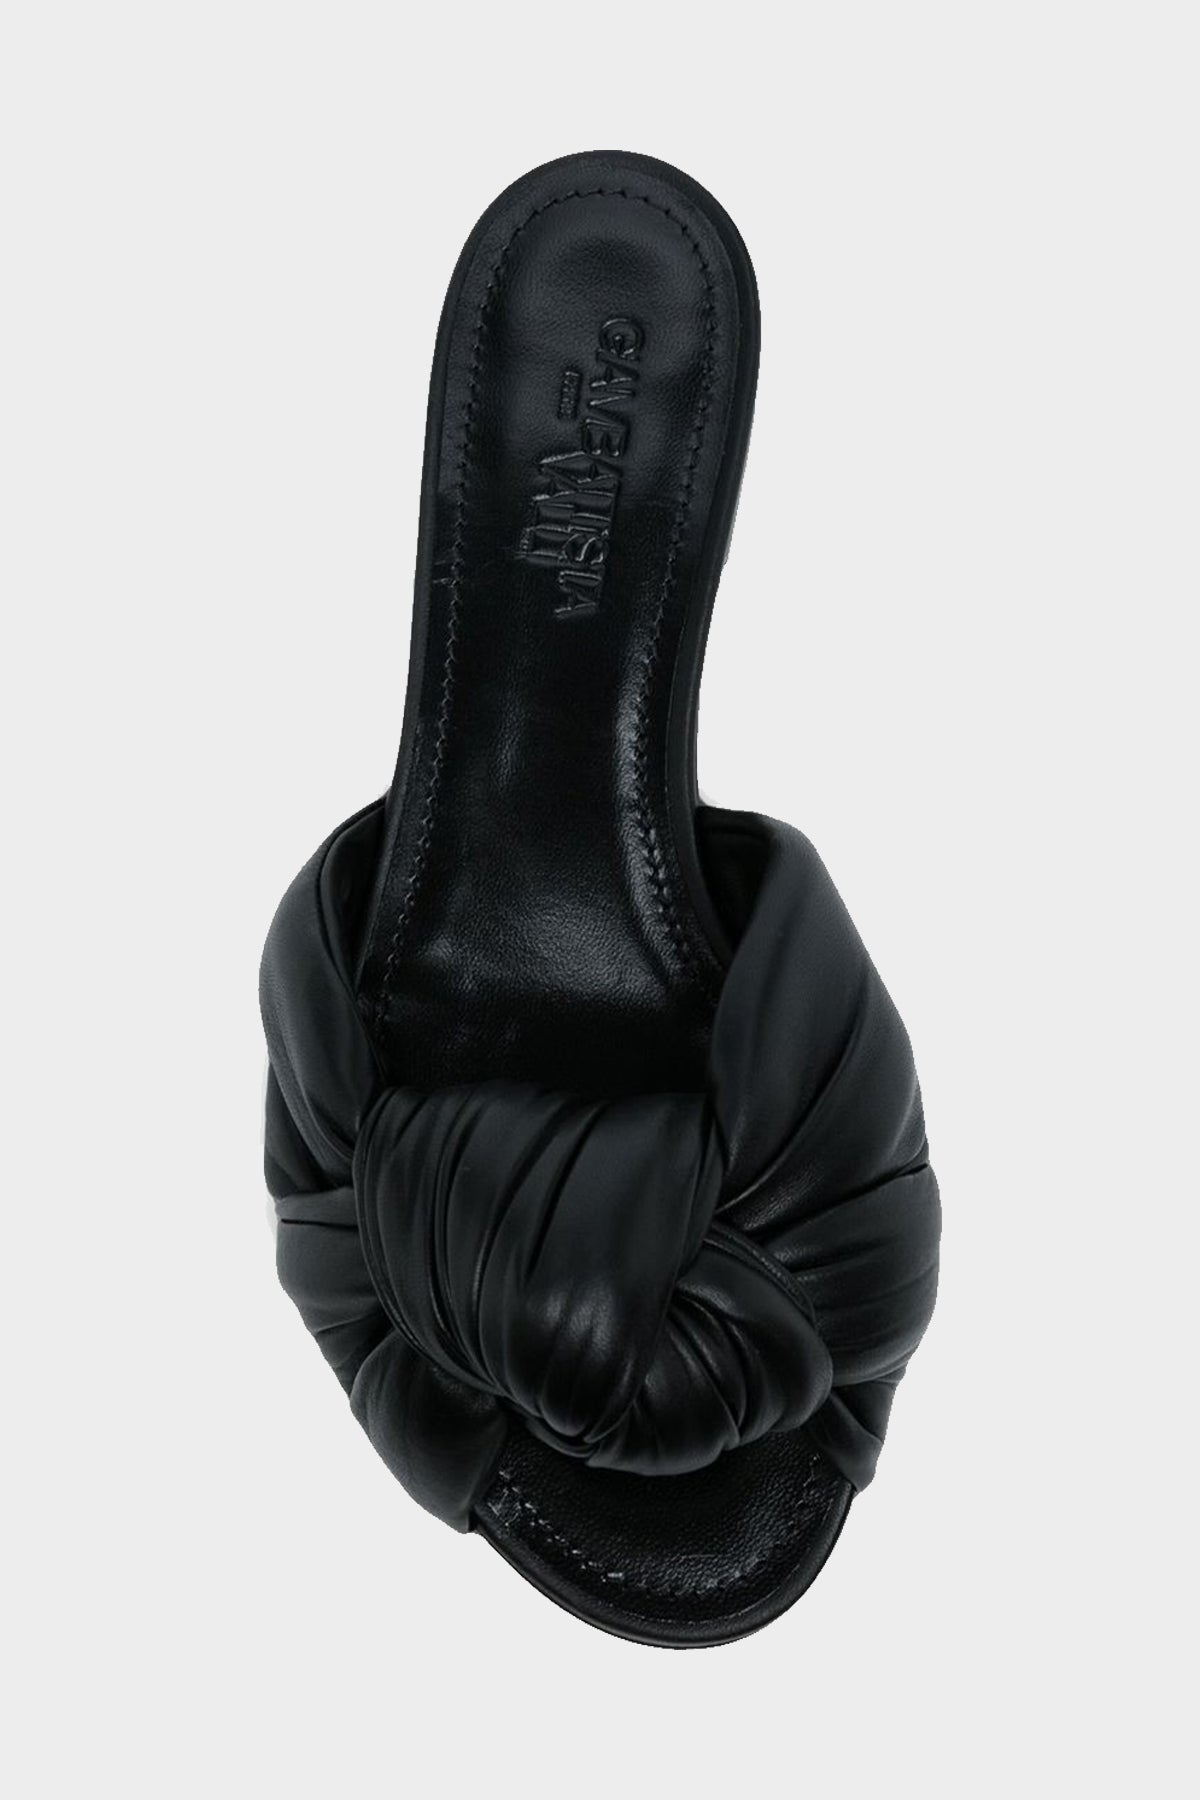 Maxi Bow Leather Flats in Black - shop-olivia.com